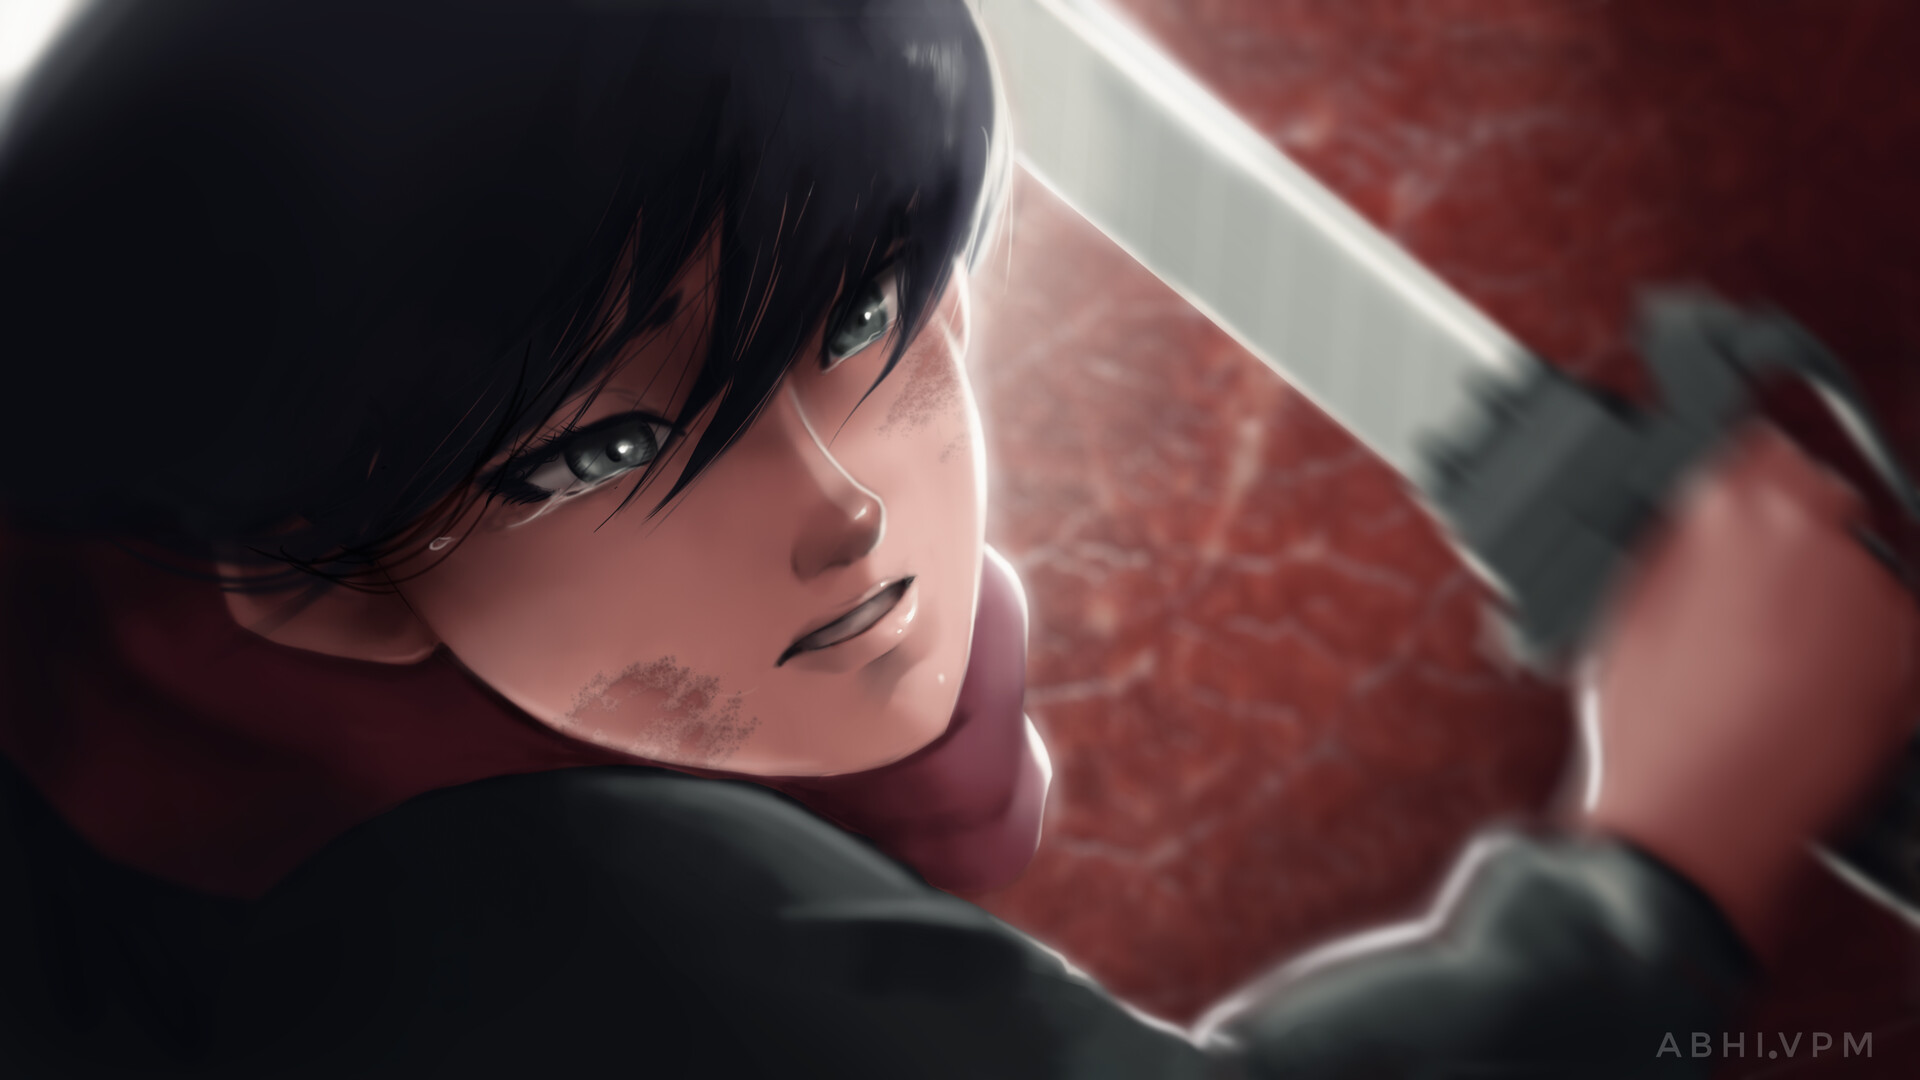 Anime Attack On Titan HD Wallpaper by Abhi Vpm